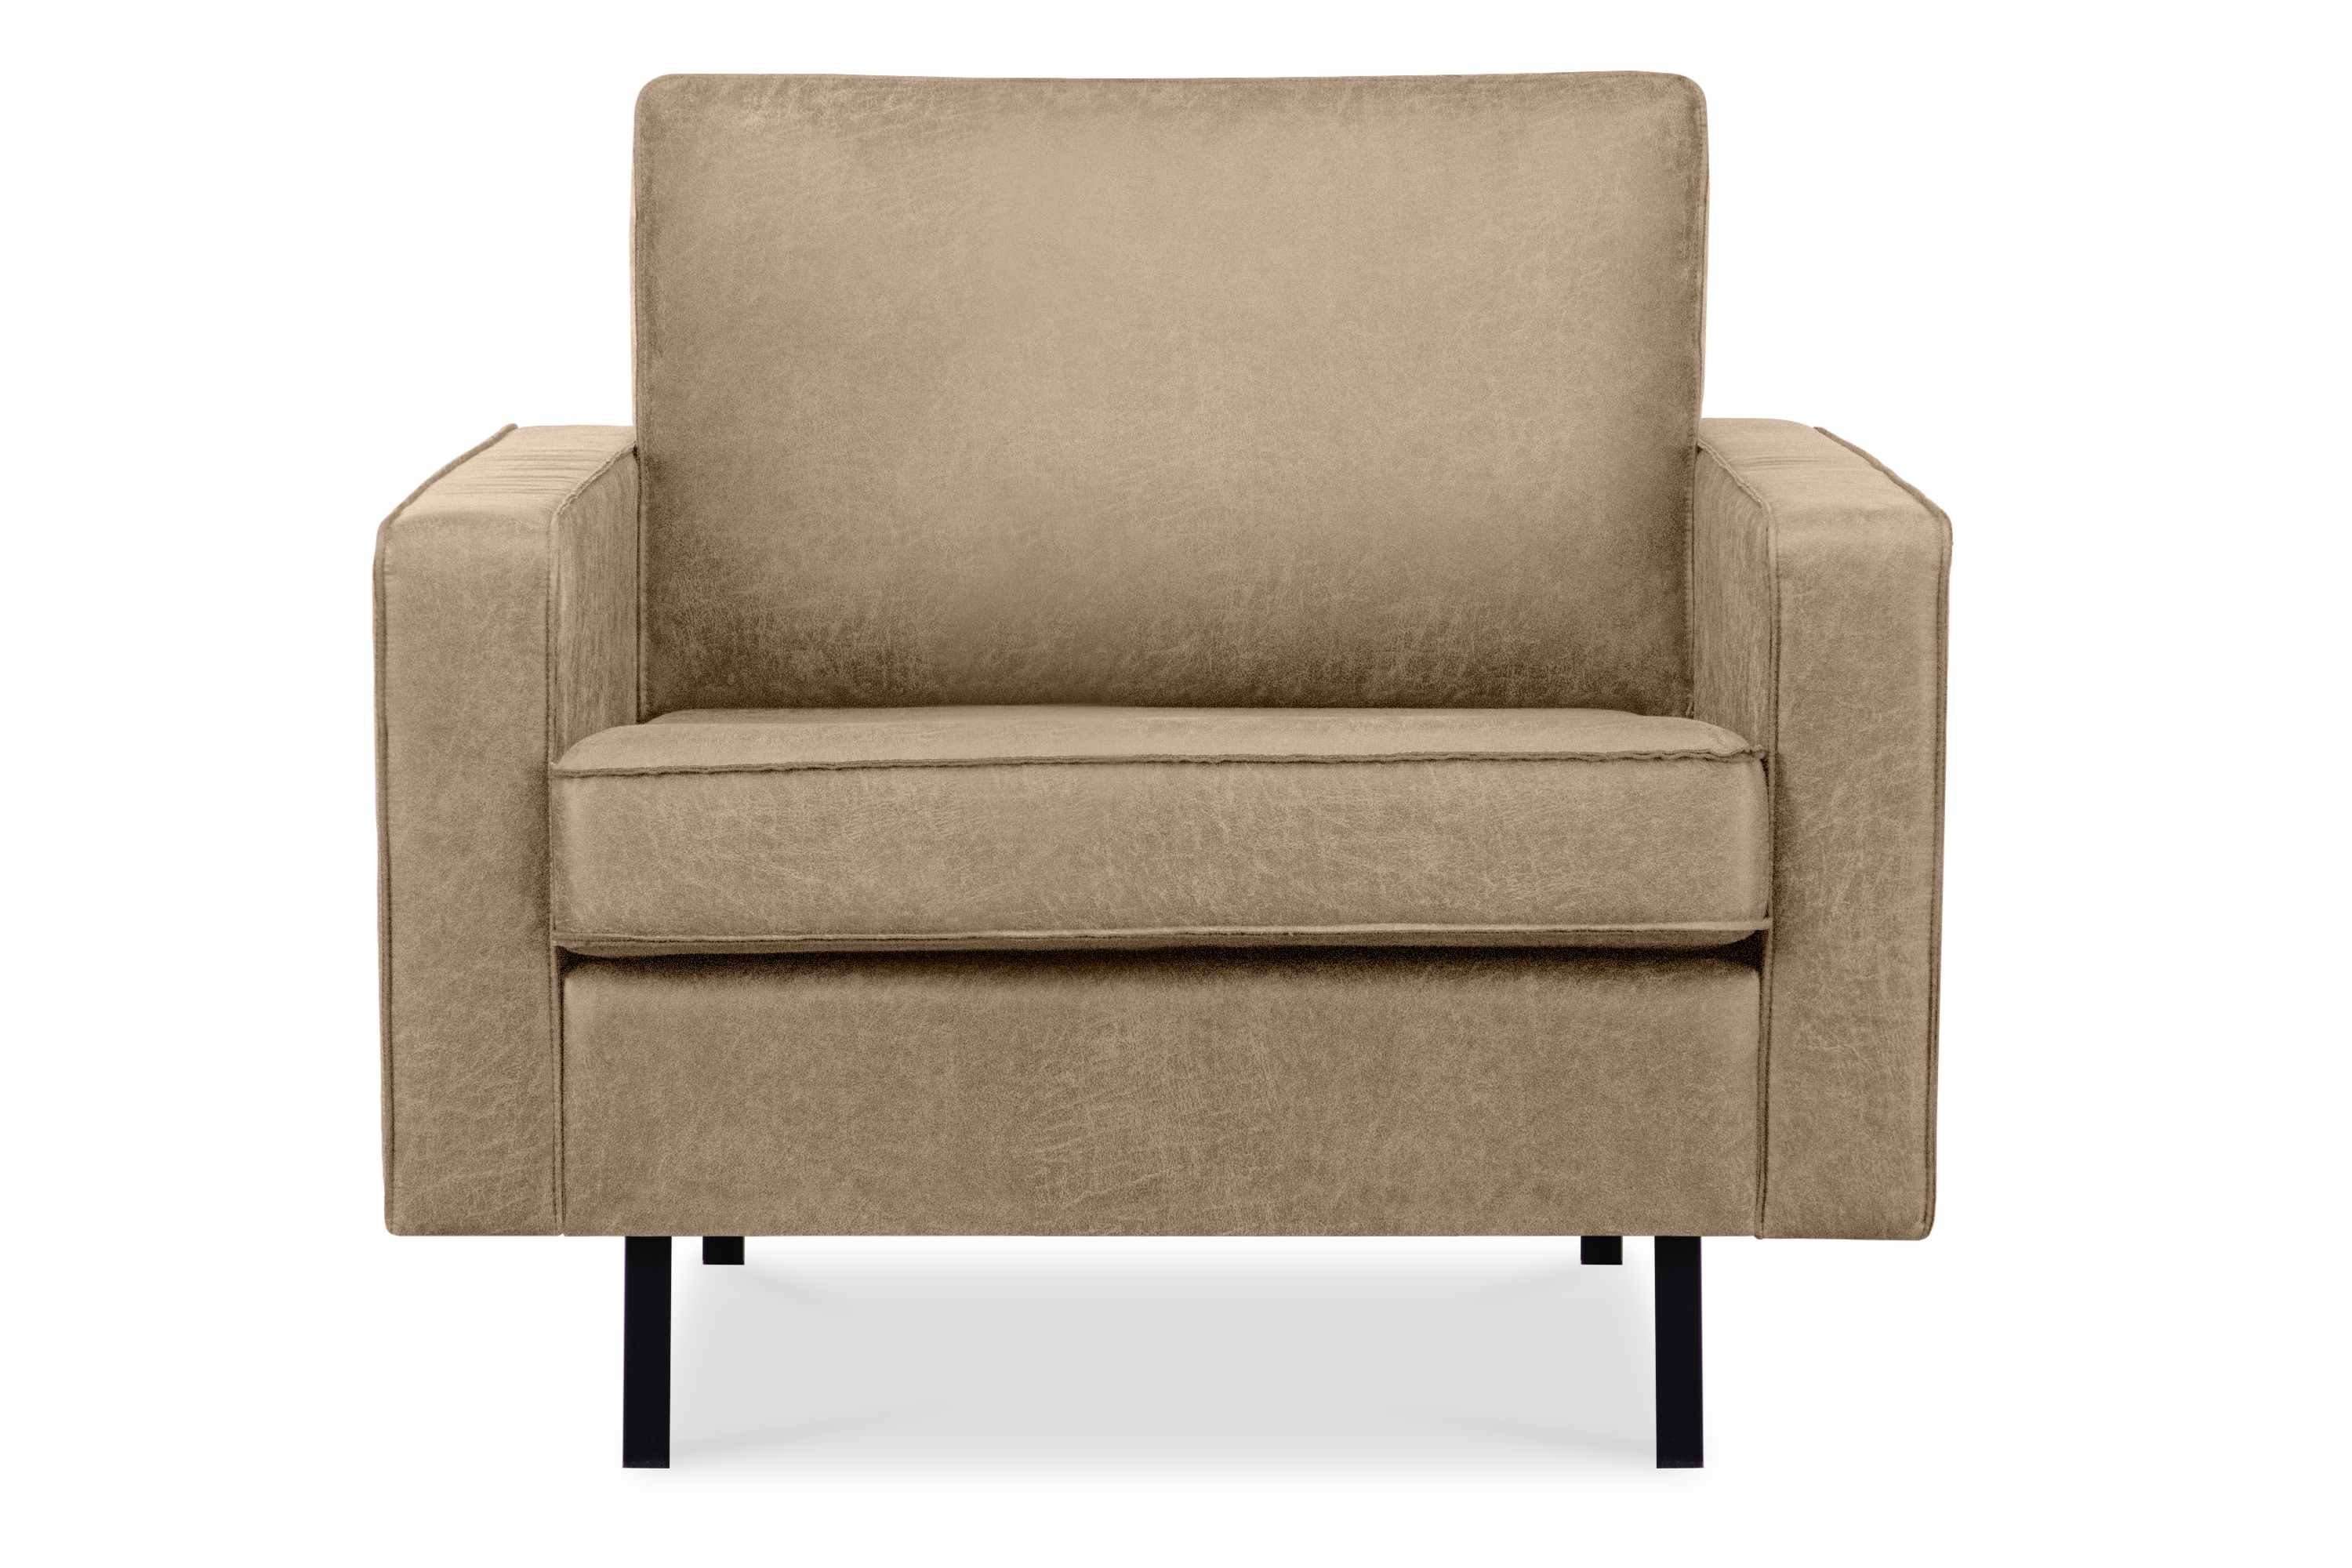 Konsimo beige Hergestellt | INVIA EU, Echtleder, Sessel, beige | beige Loft-Stil Vintage, in Sessel Grundschicht: